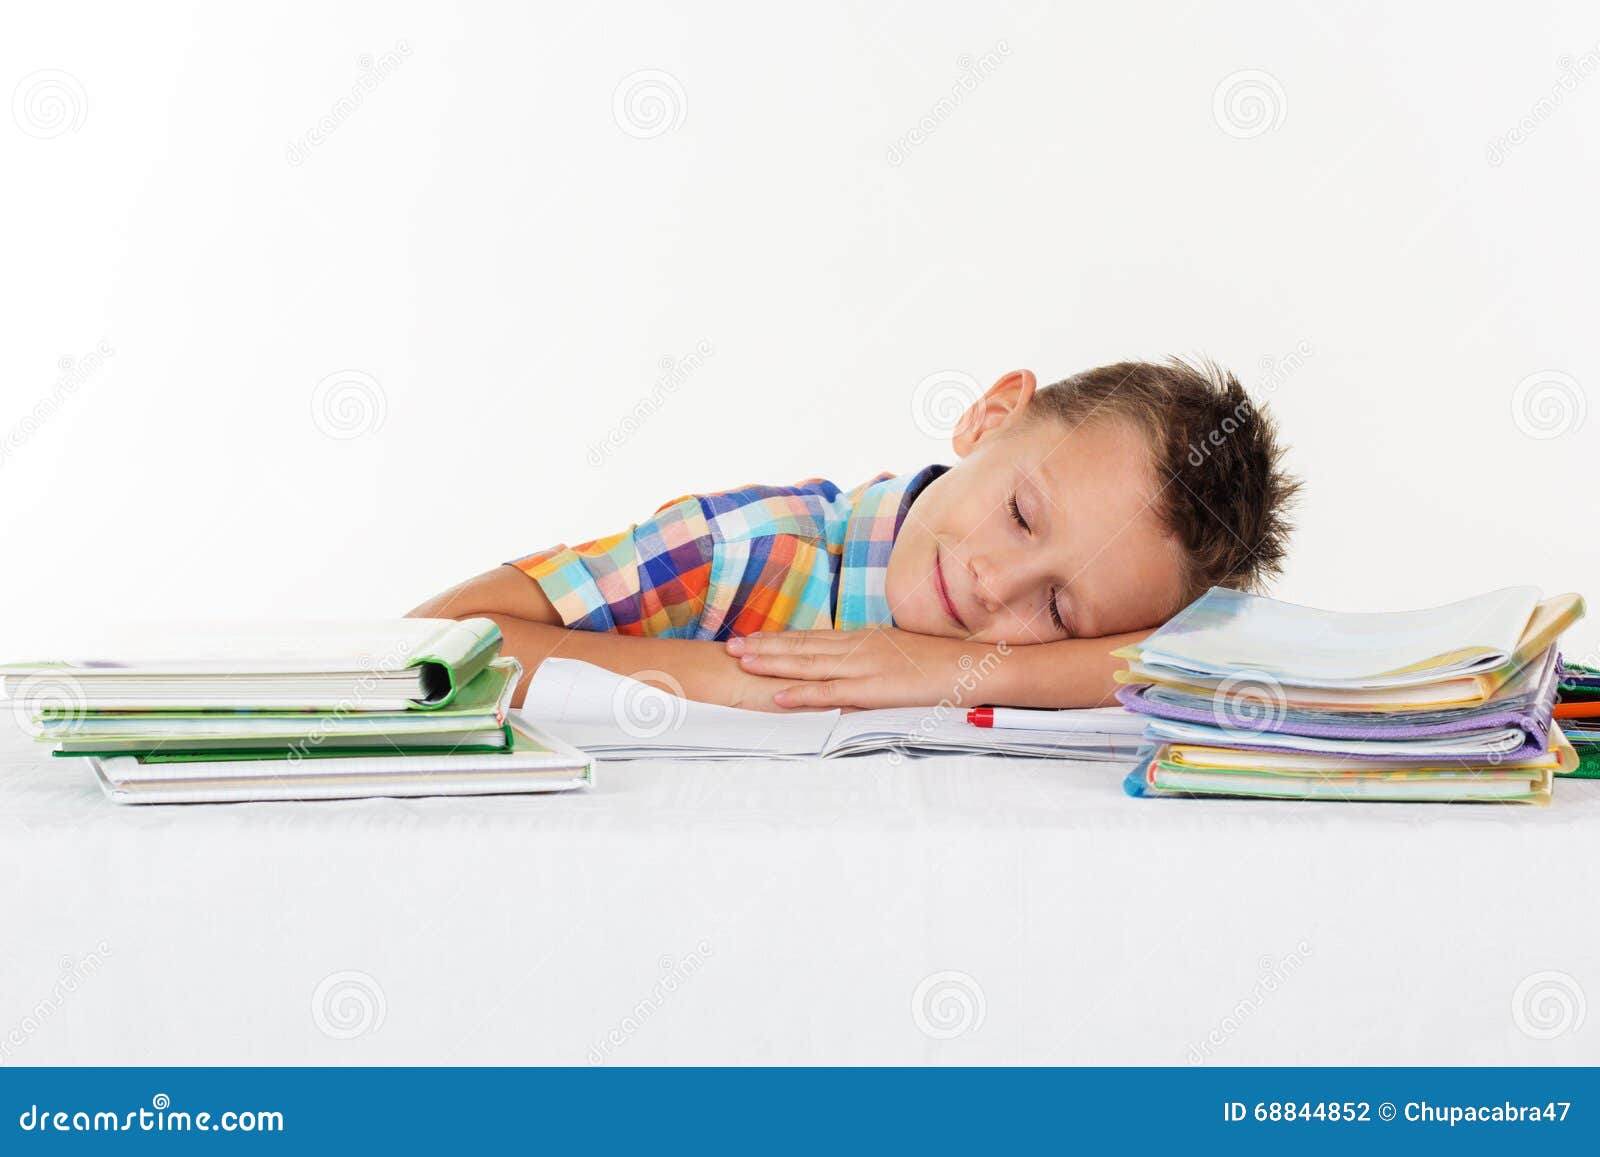 Tired School Boy Is Sleeping On Desk Stock Photo Image Of Desk